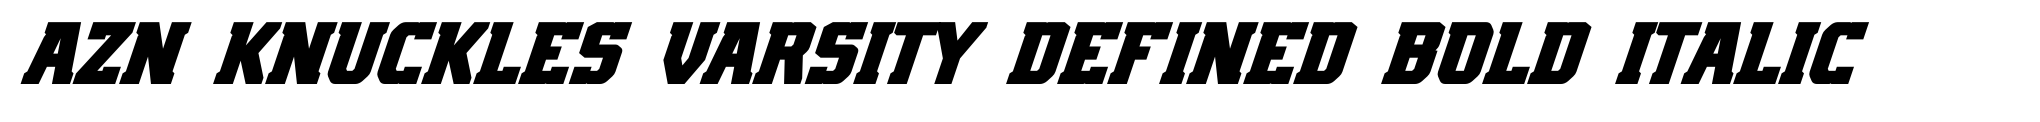 AZN Knuckles Varsity Defined Bold Italic image